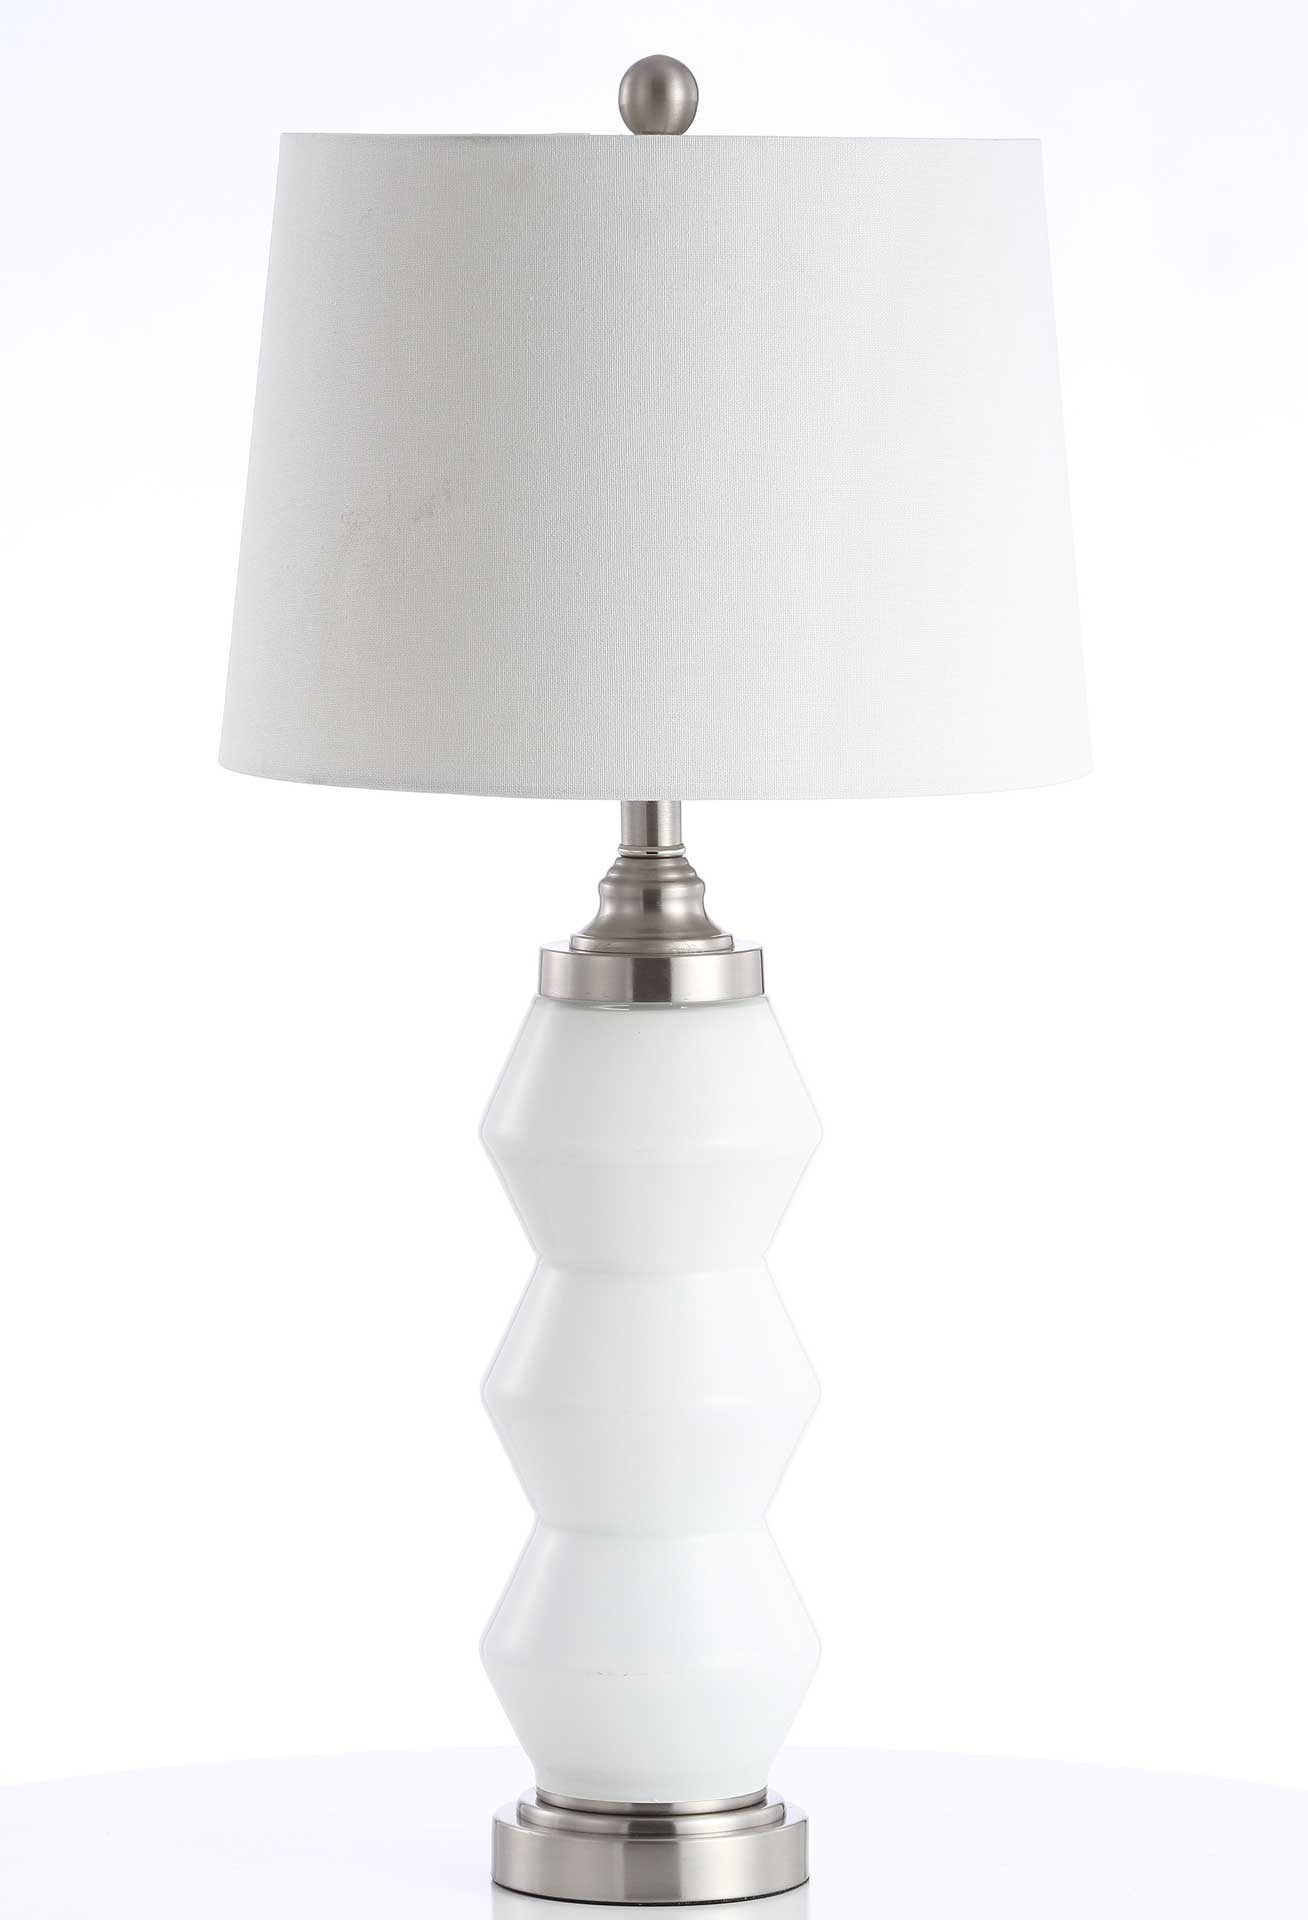 Java Table Lamp White/Nickel